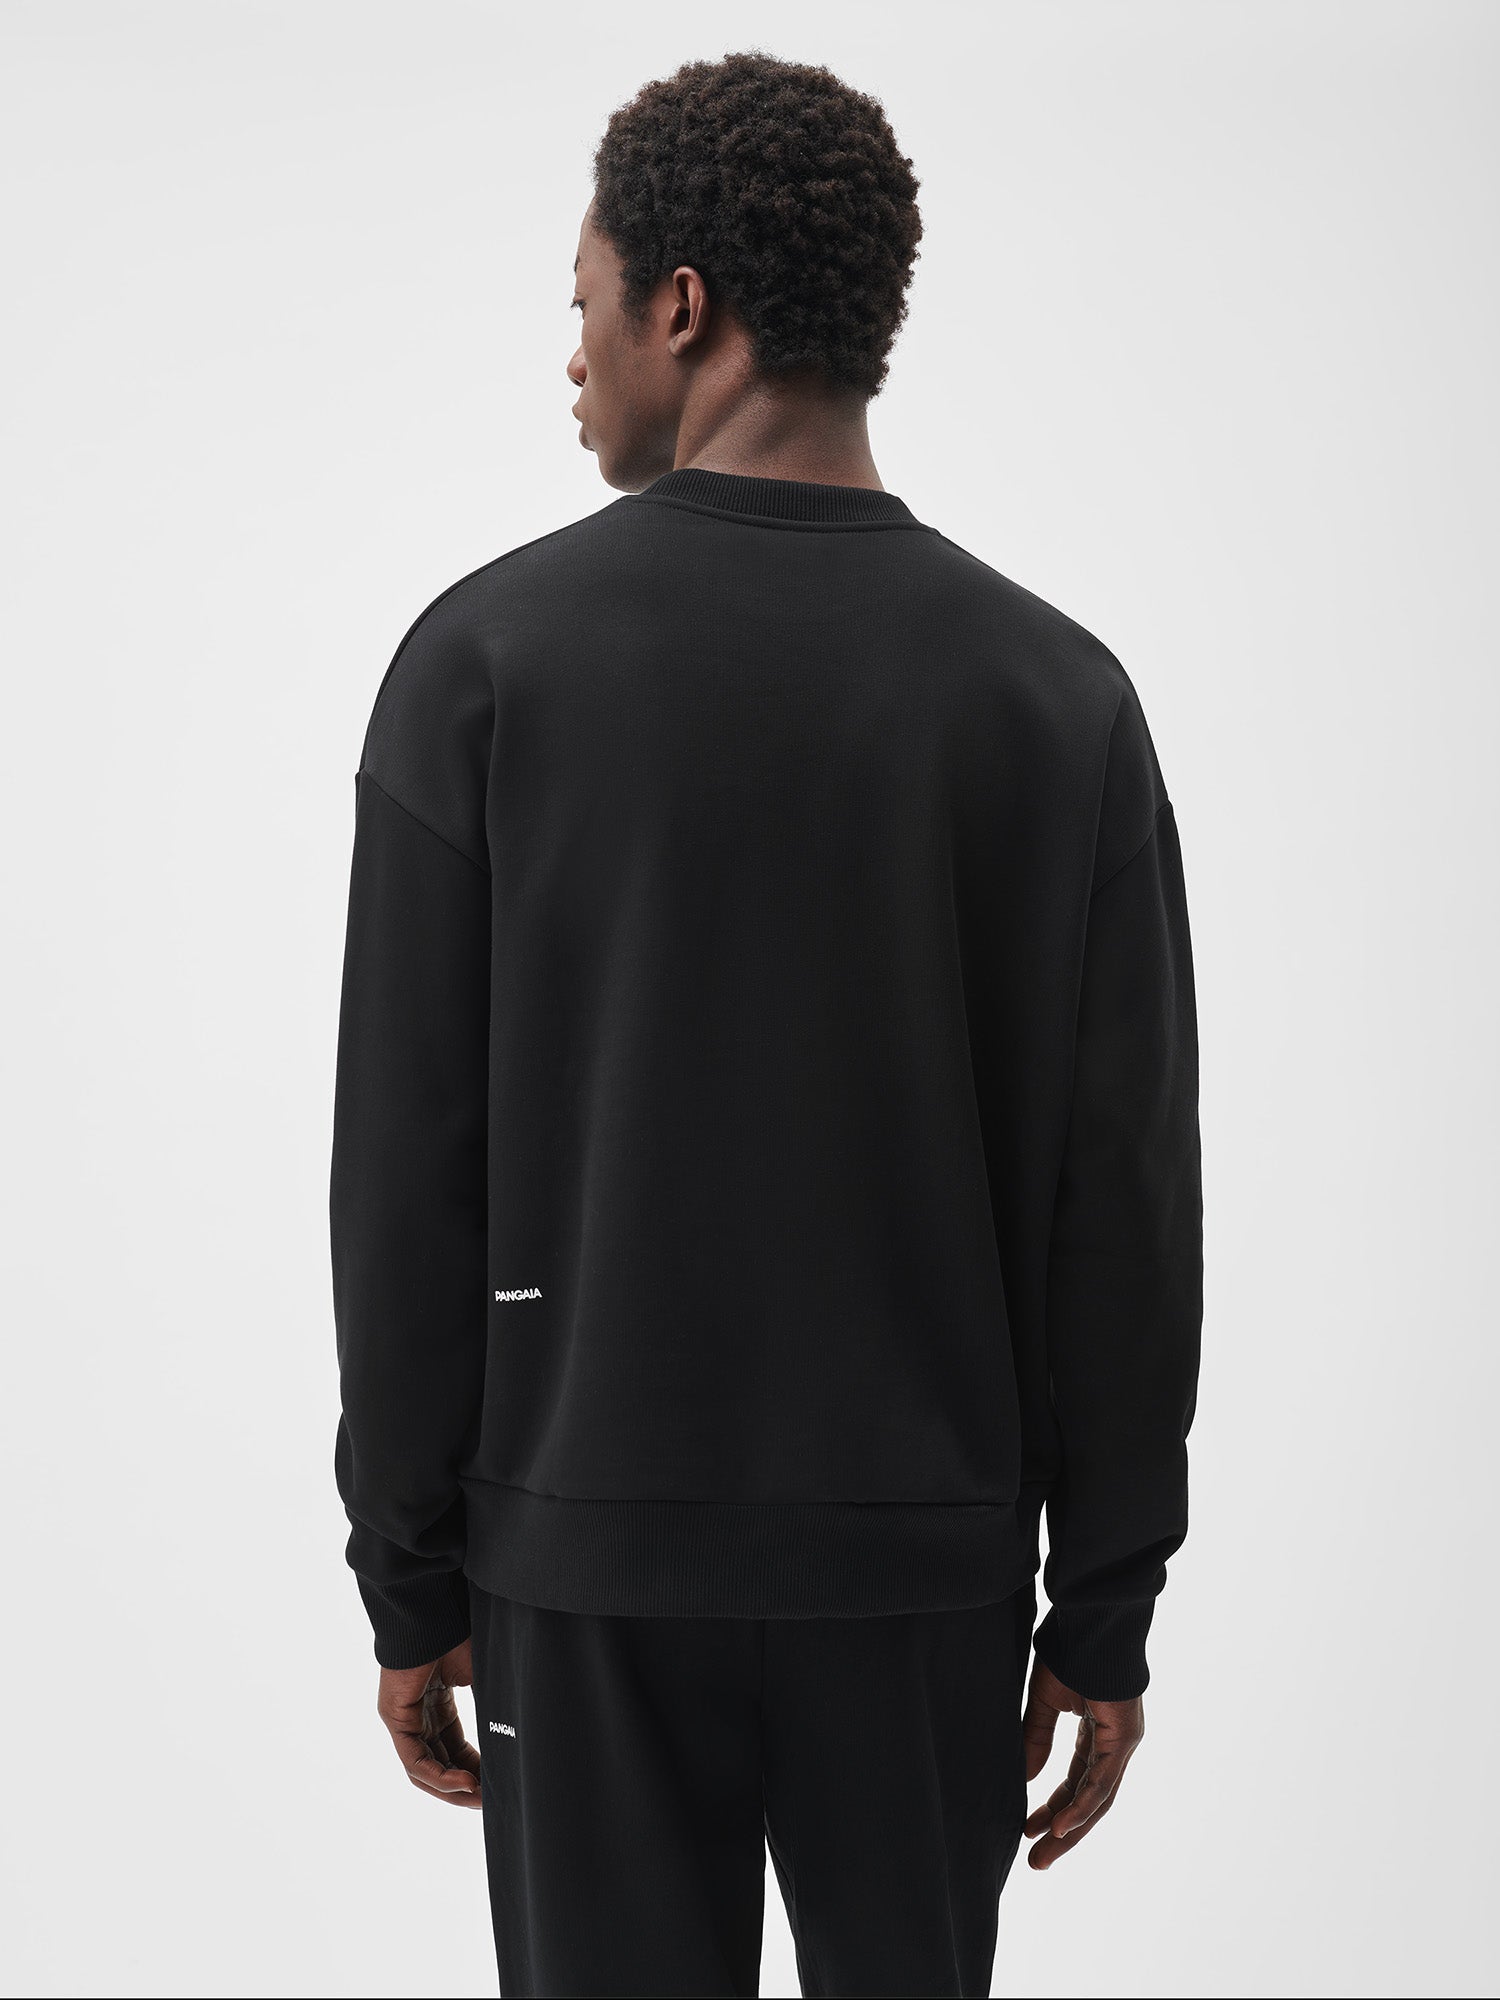 Signature-Sweatshirt-Black-Model-male-3